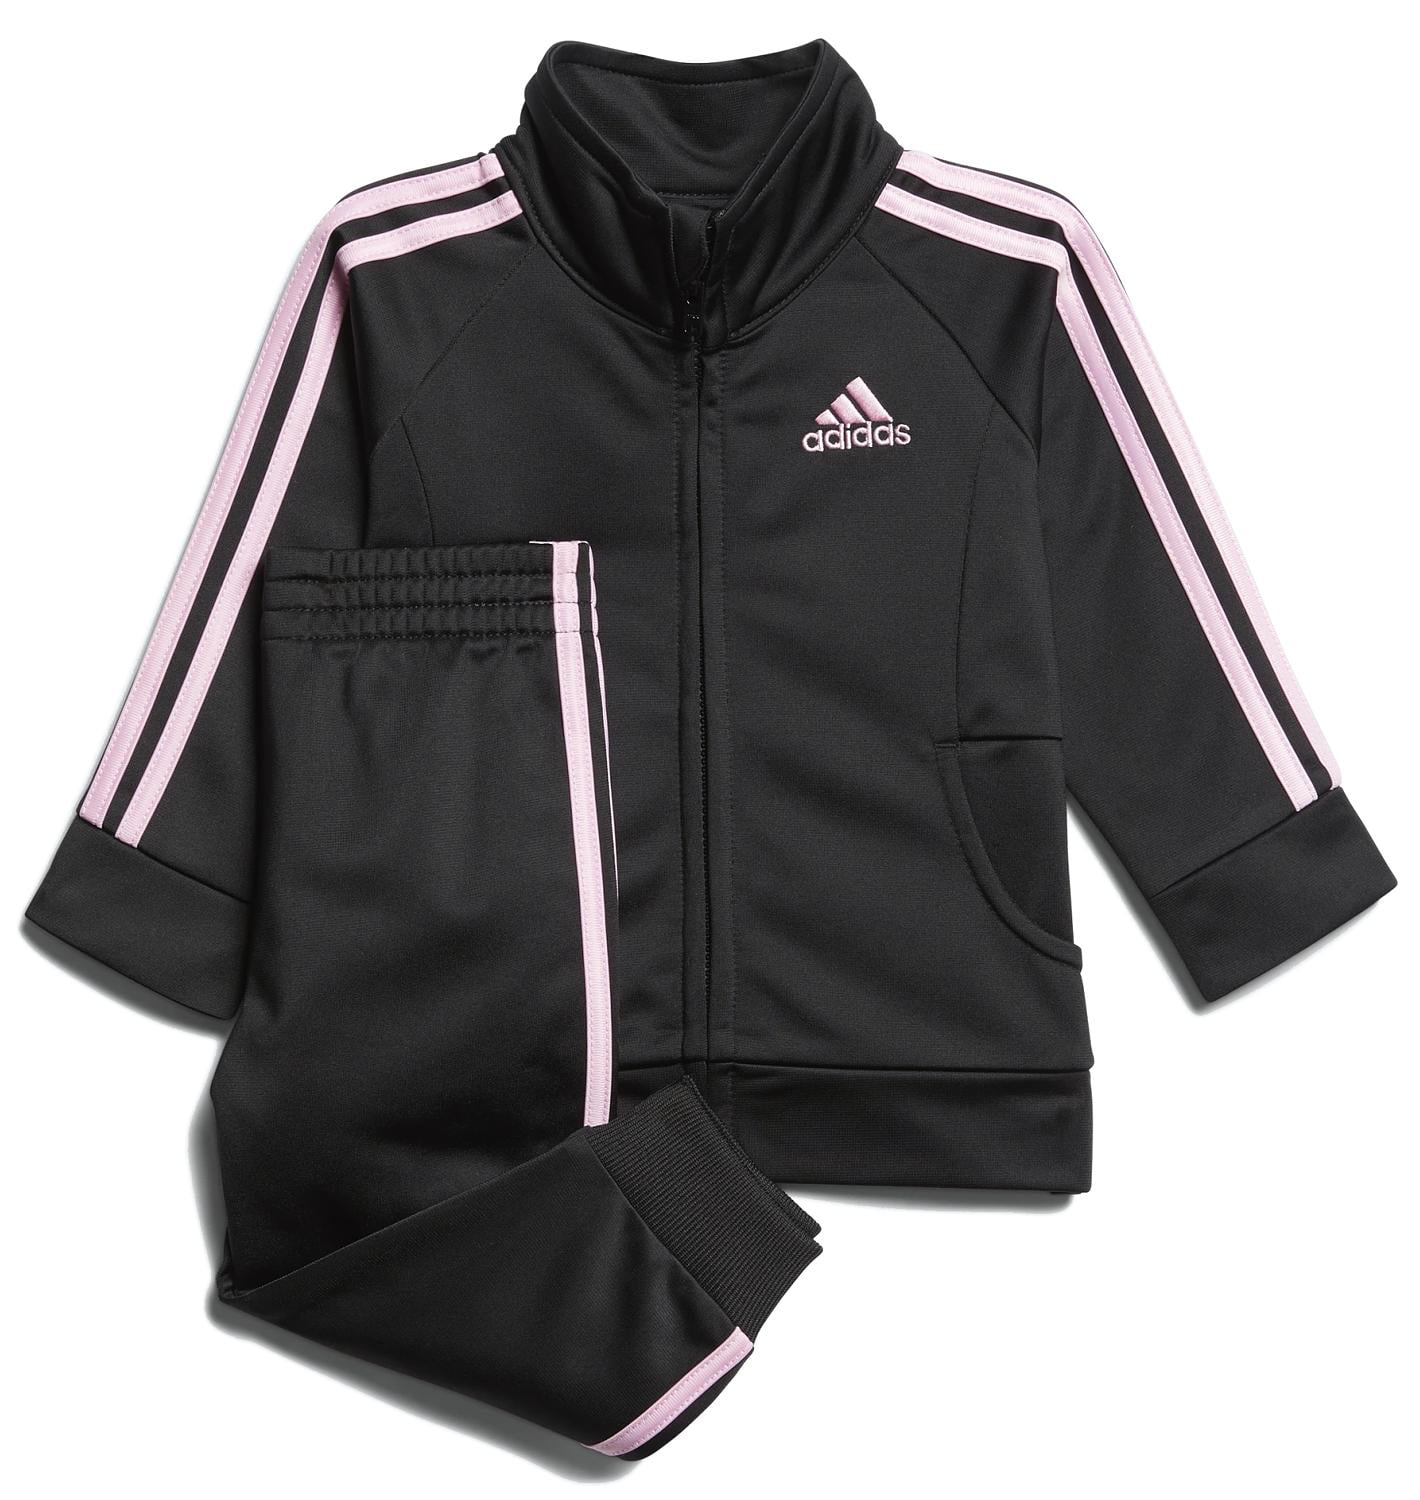 adidas Baby Girls Infant Tricot Suit Set, Black/Pink Walmart.com